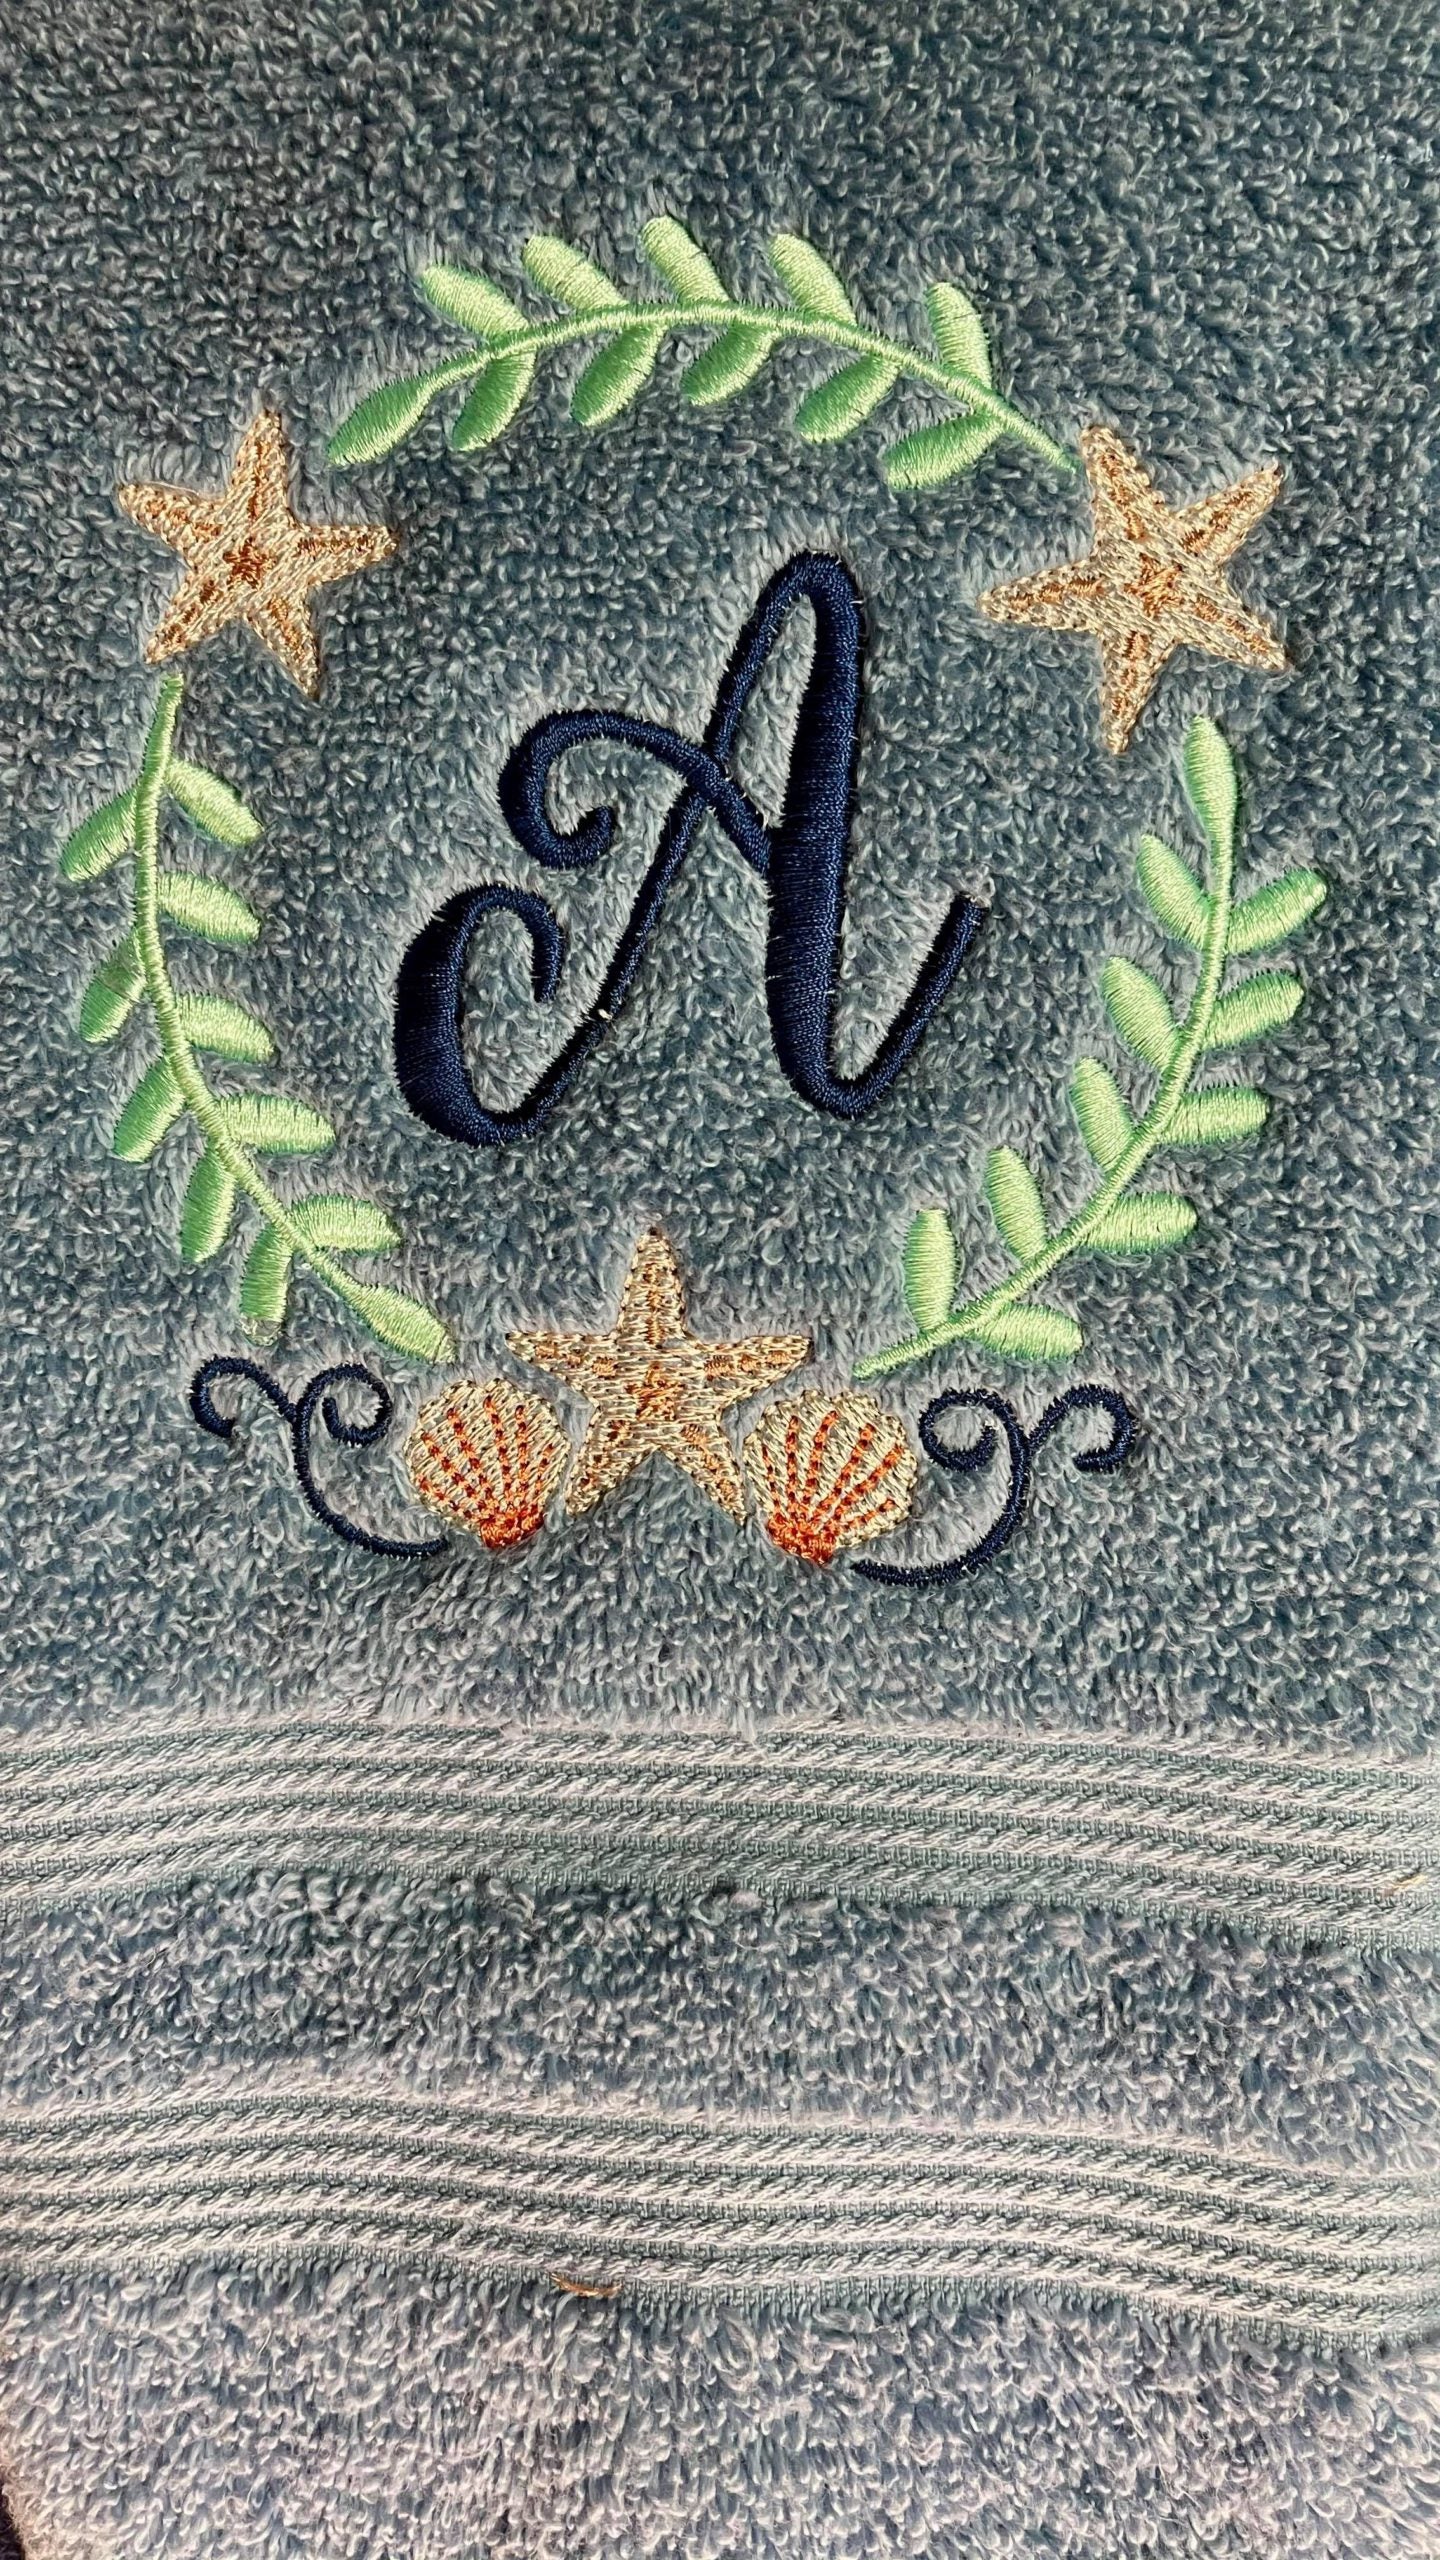 Starfish Monogram Frame - 4 sizes- Digital Embroidery Design